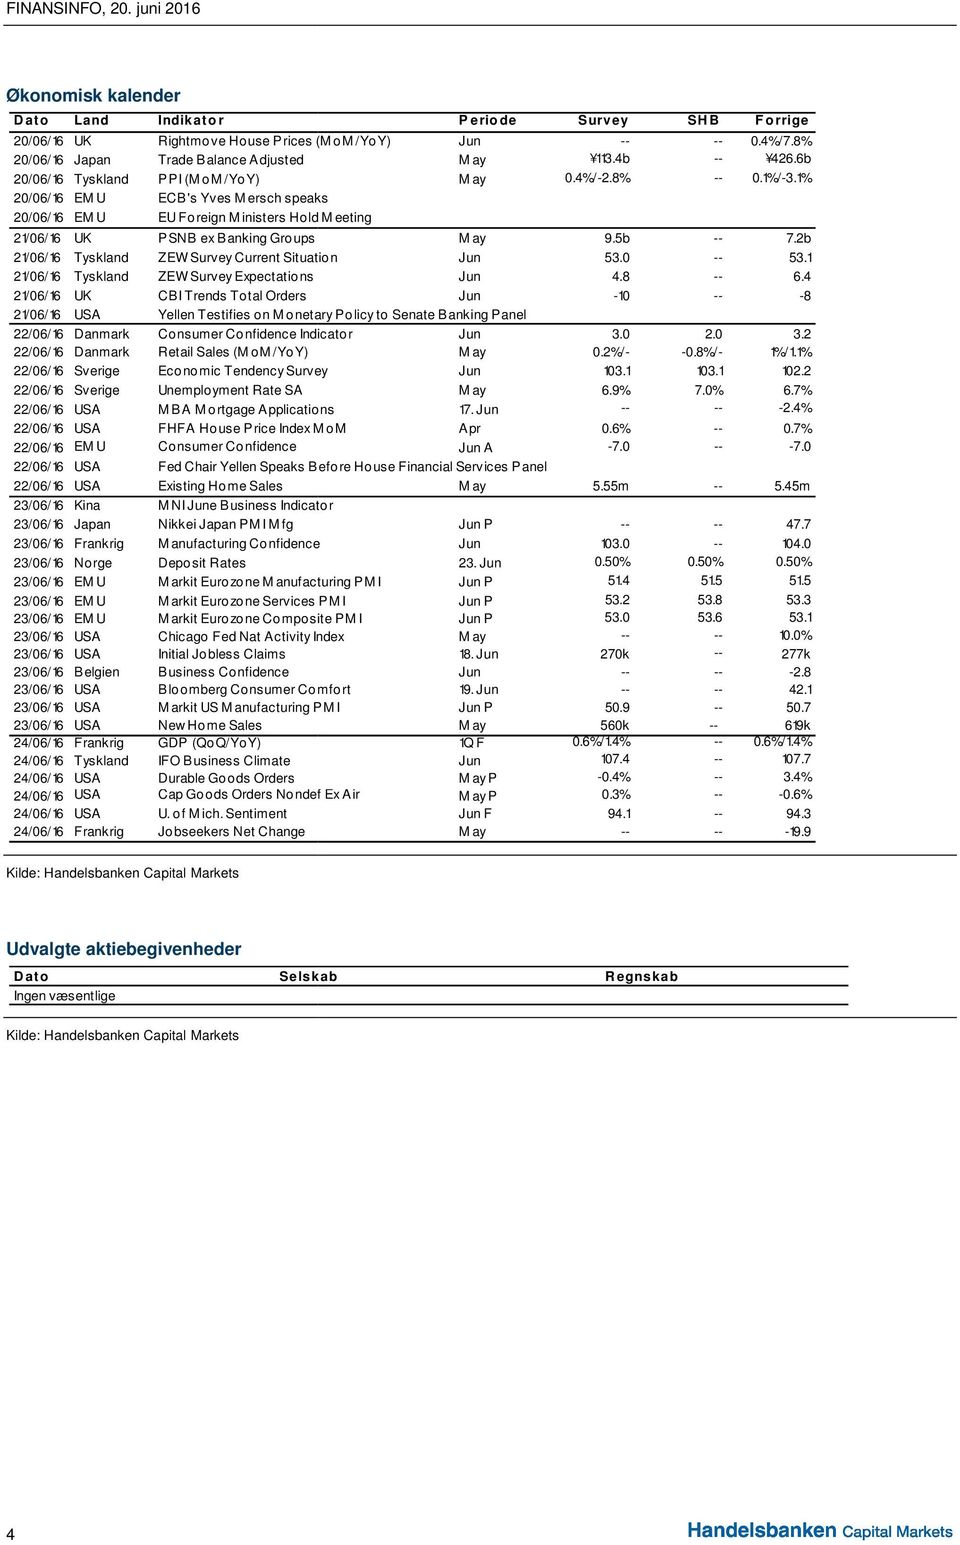 4 21/06/16 UK CBI Trends Total Orders Jun -10 -- -8 21/06/16 USA Yellen Testifies on M onetary Policy to Senate Banking Panel 22/06/16 Danmark Consumer Confidence Indicator Jun 3.0 2.0 3.